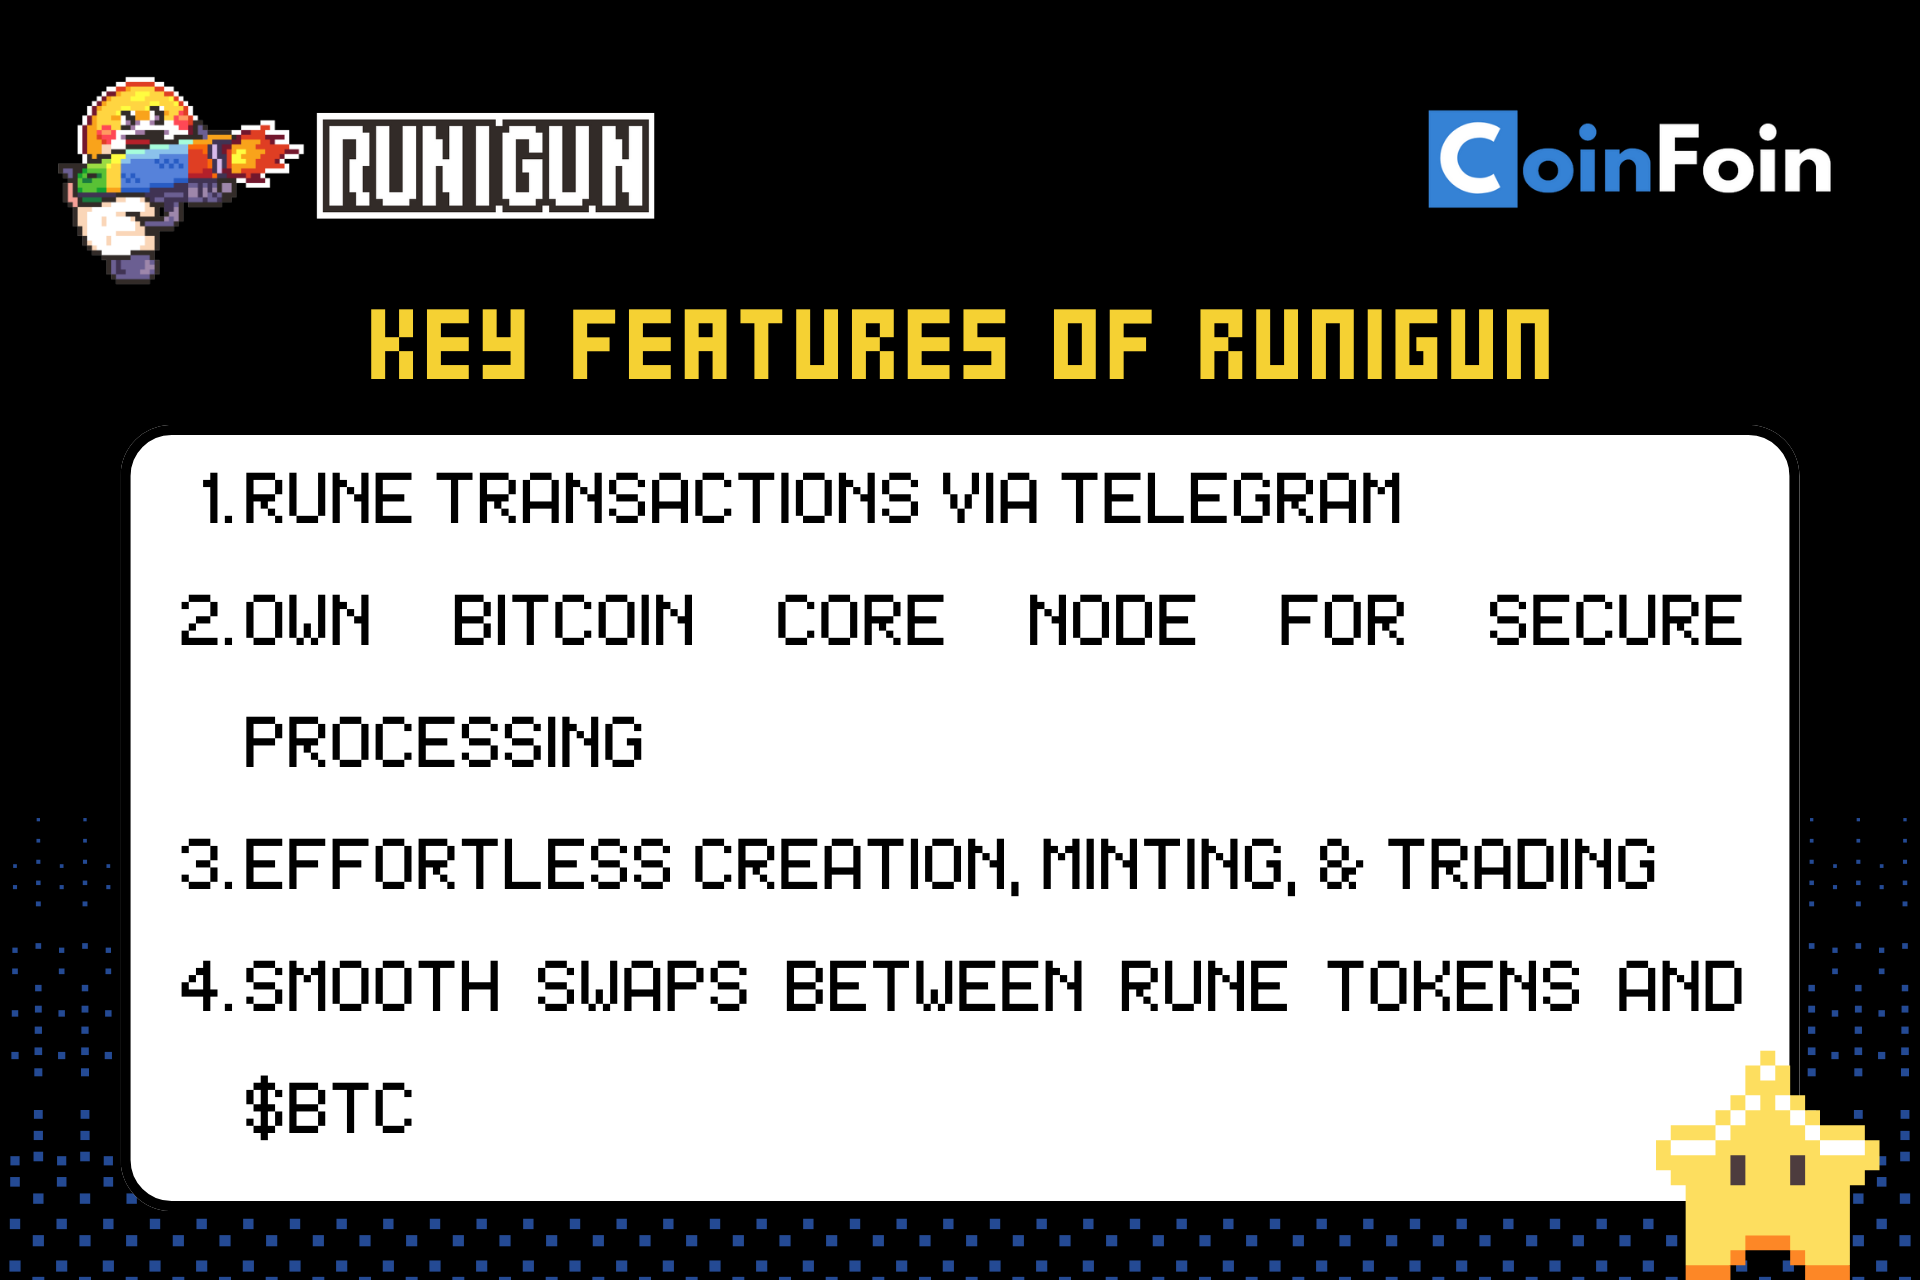 Key Features of RuniGun